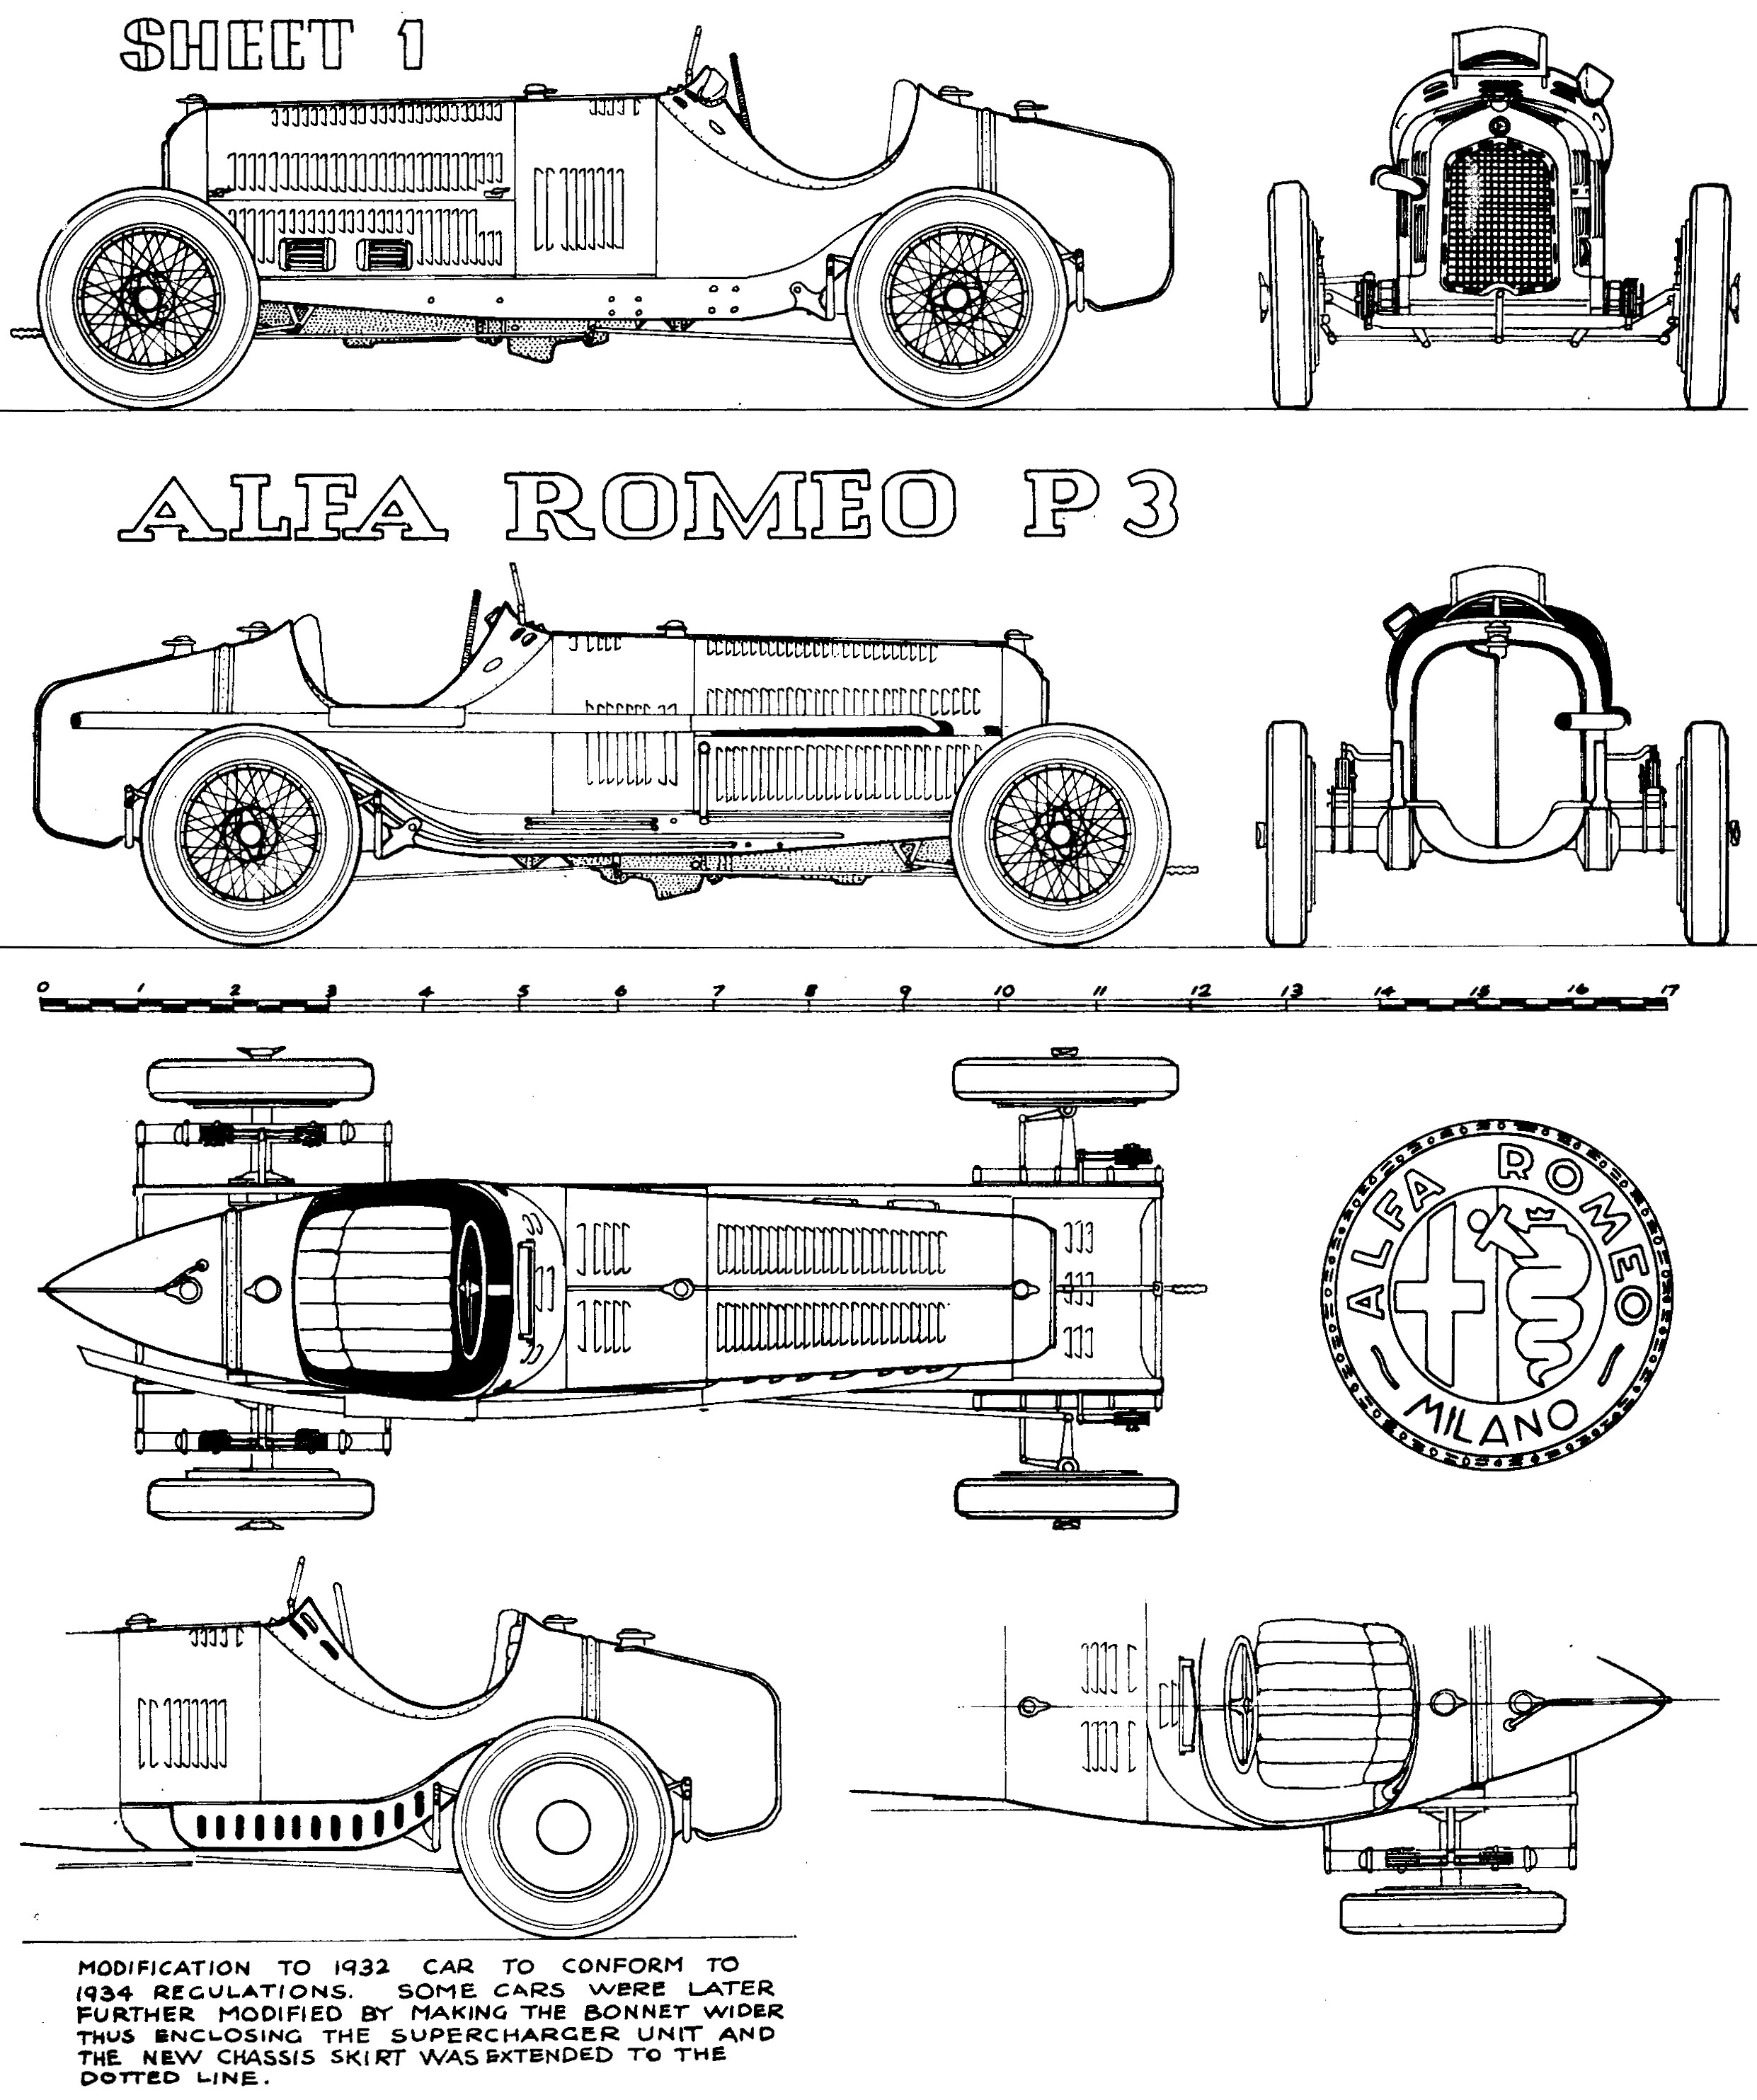 Car Frame Diagram Alfa Romeo P3 1932 33 Of Car Frame Diagram